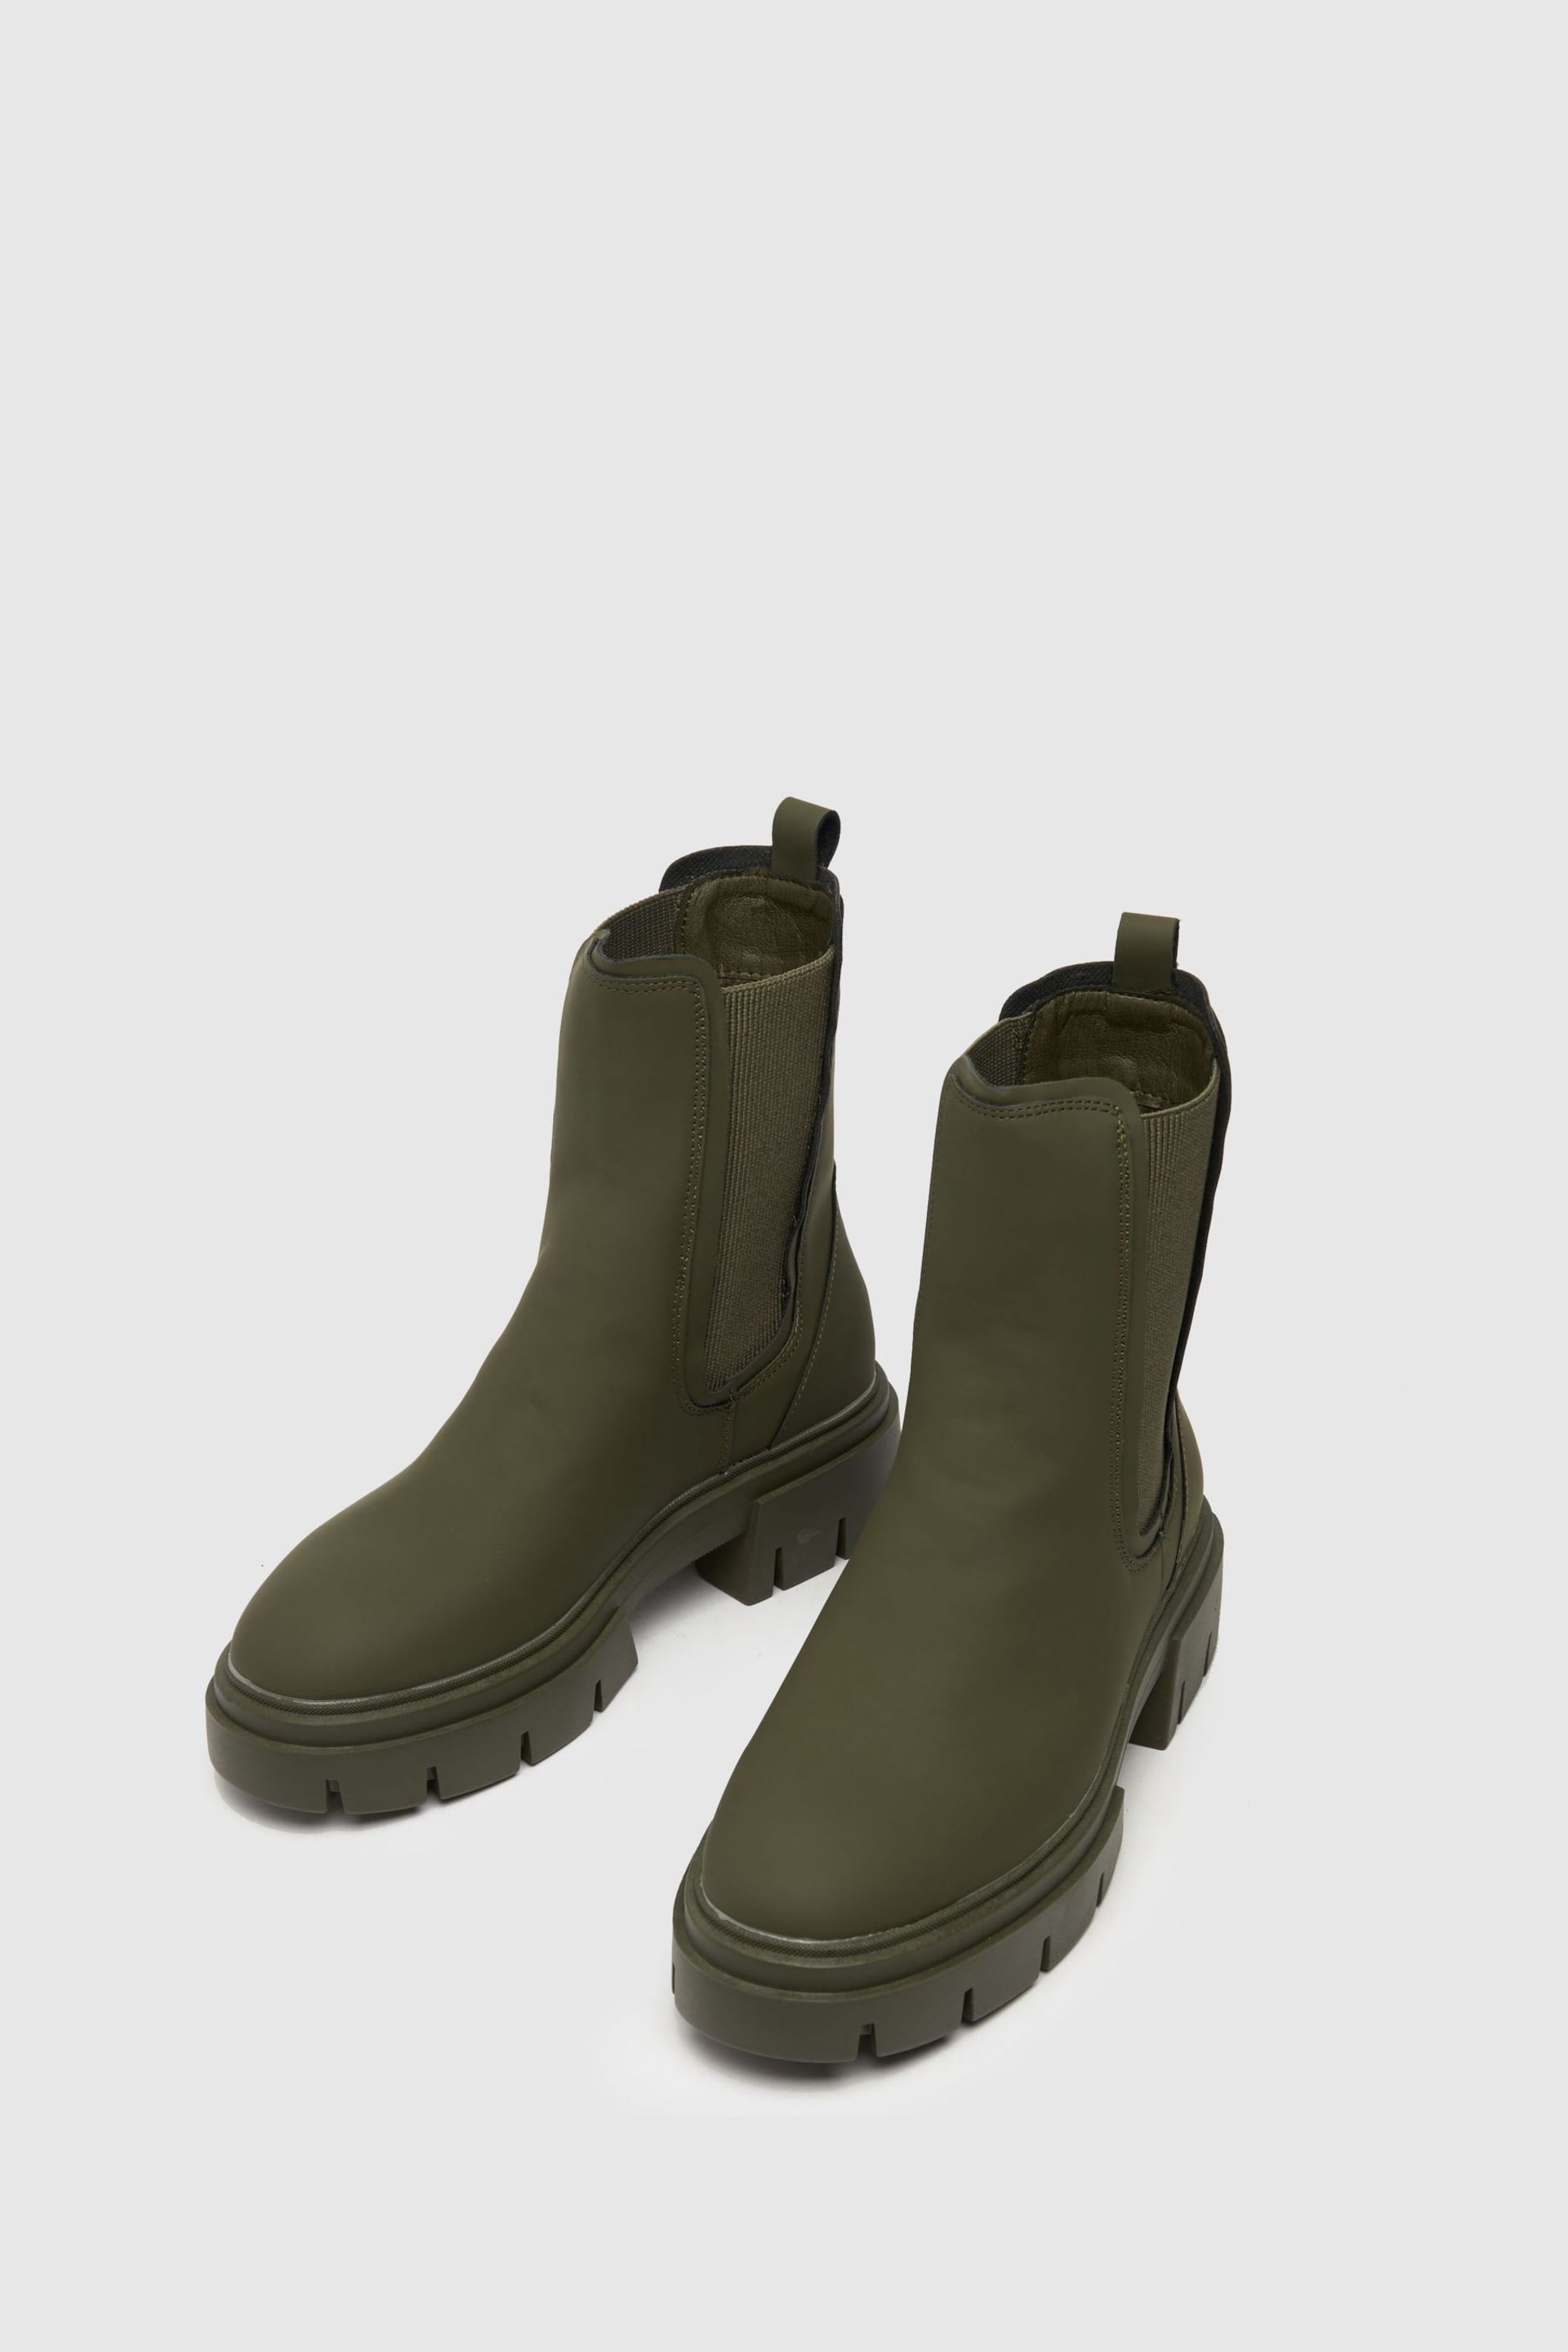 Schuh Green Amaya Chunky Chelsea Boots - Image 4 of 4